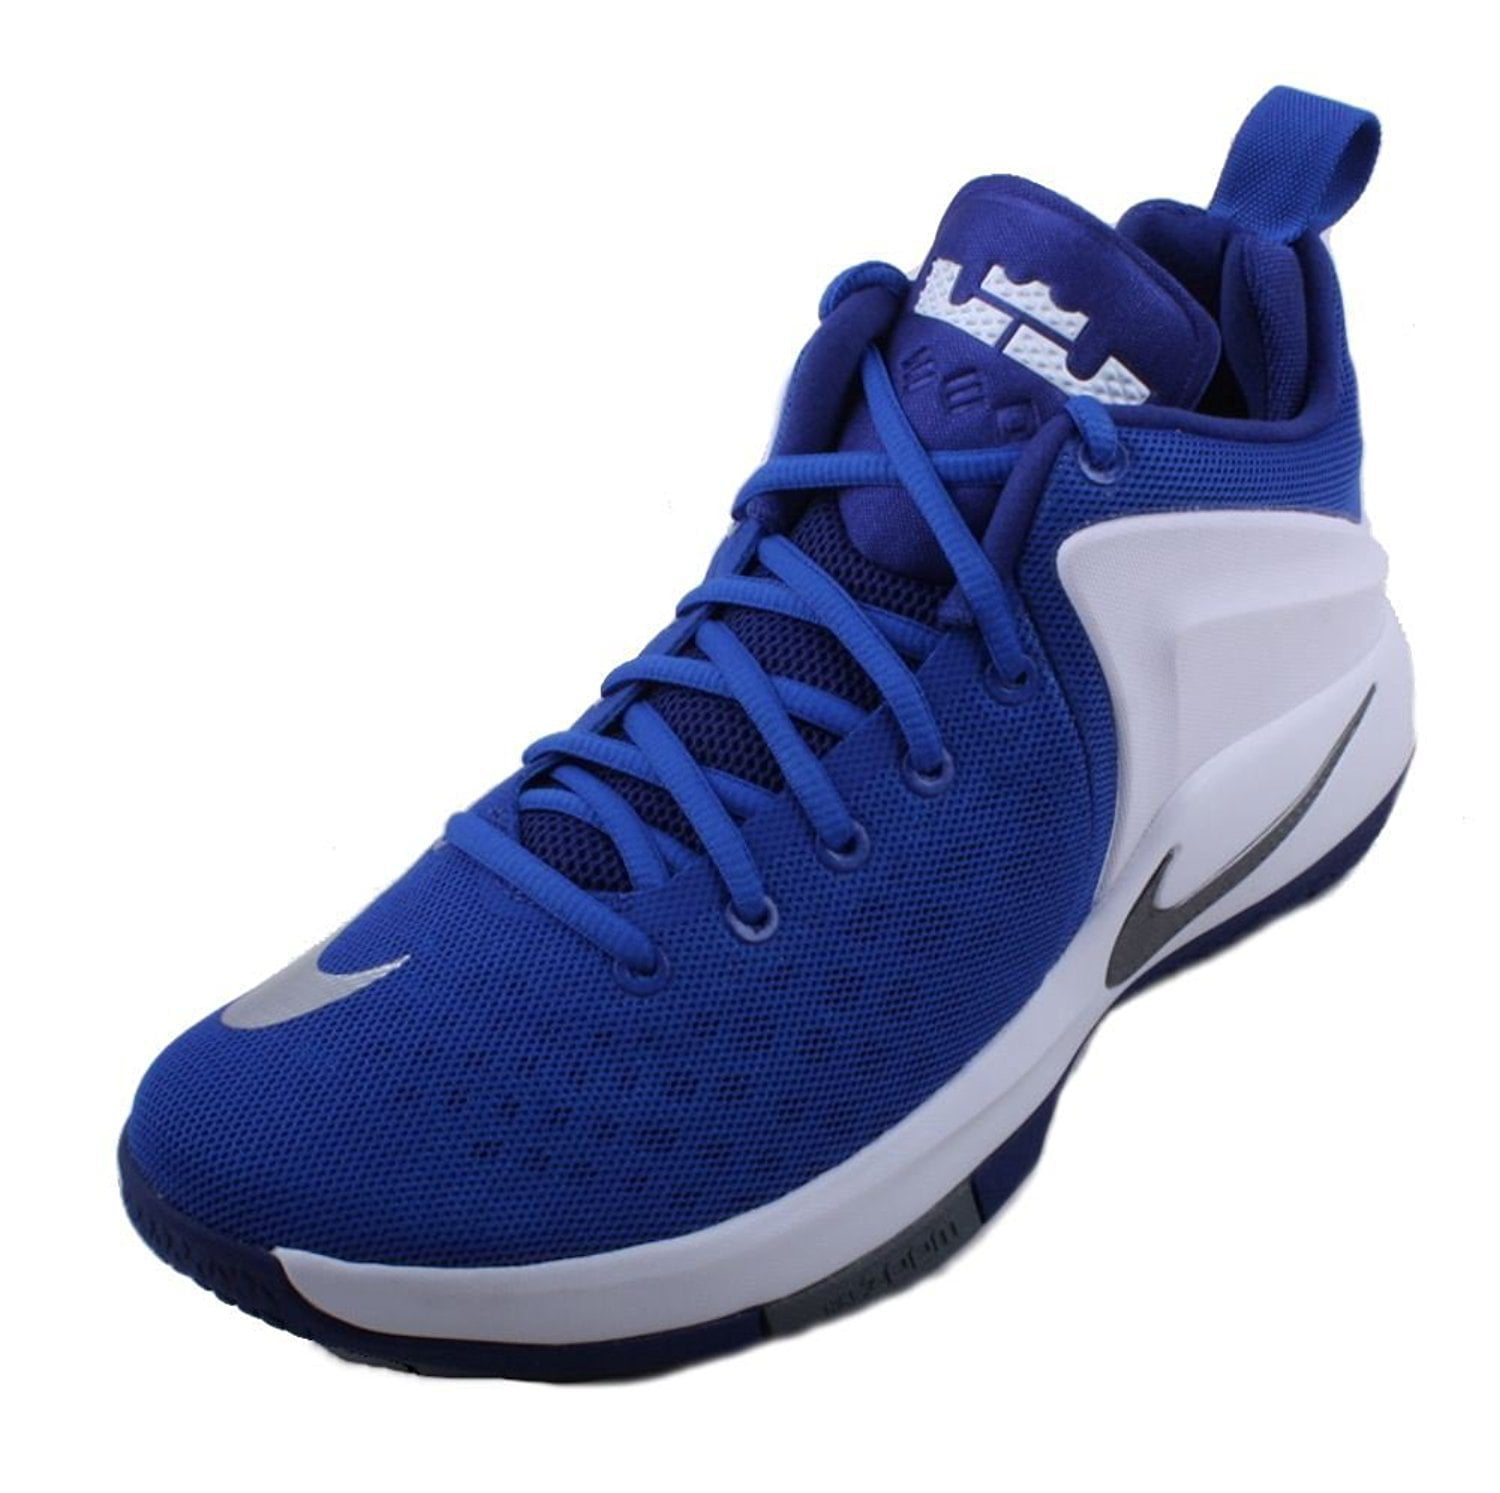 Nike - Nike Men's Zoom Witness Basketball Shoes-Blue - Walmart.com ...